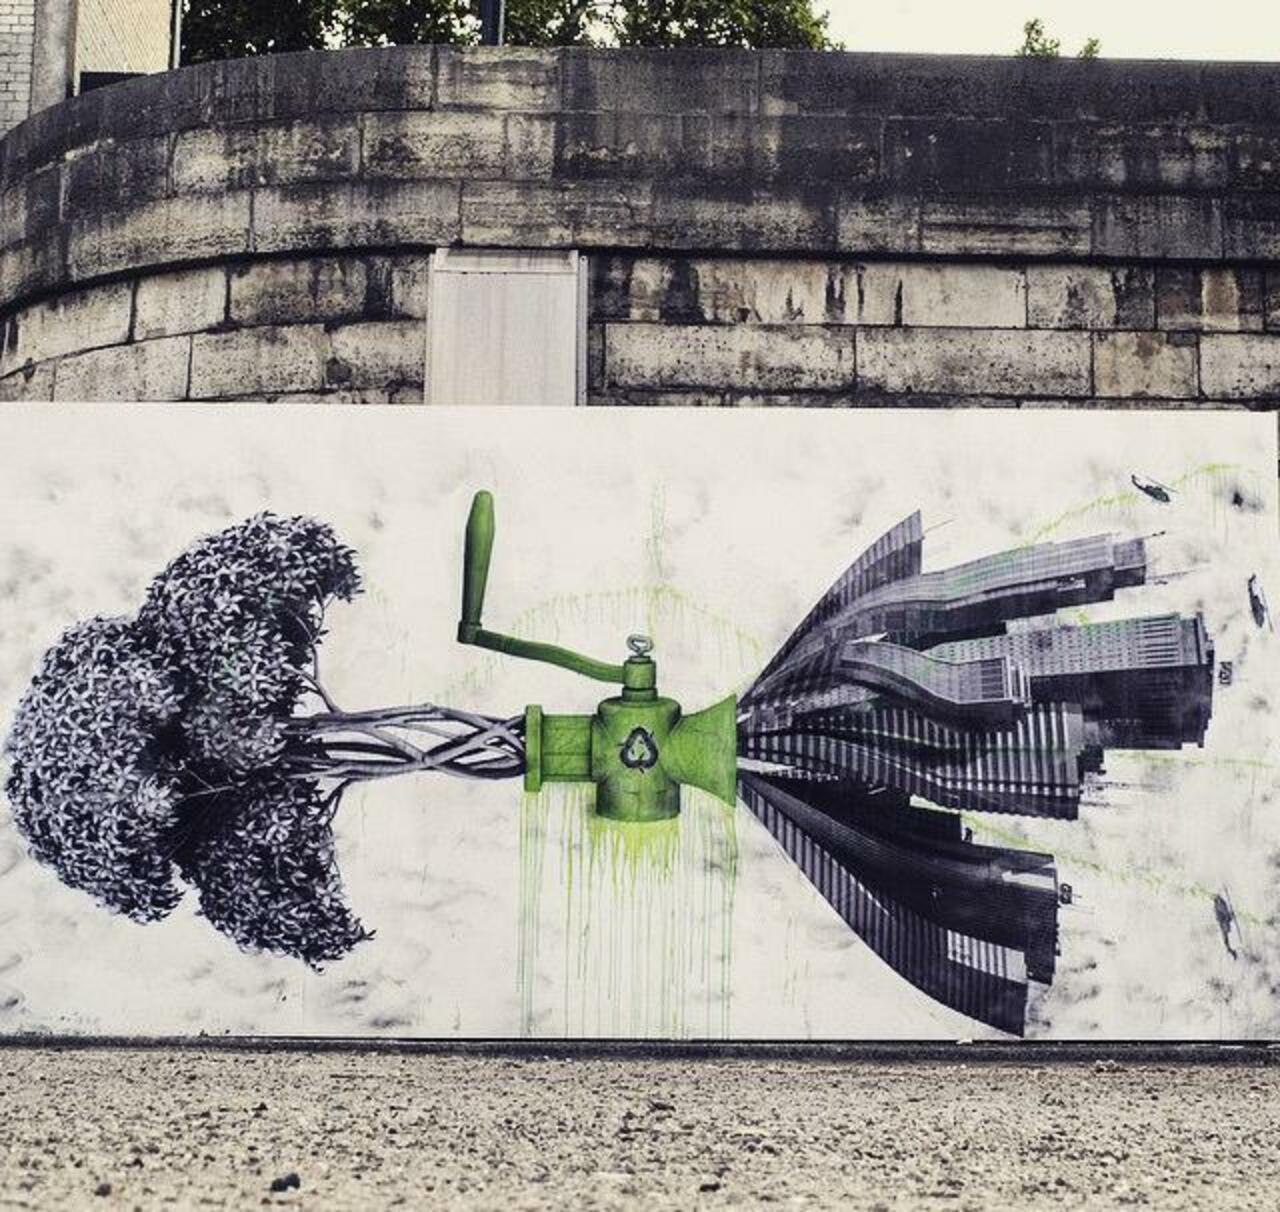 RT @Martin_Keller: Street Art by Ludo
#art #arte #graffiti #streetart http://t.co/ZwXNBq7gGJ #environment #climatechange